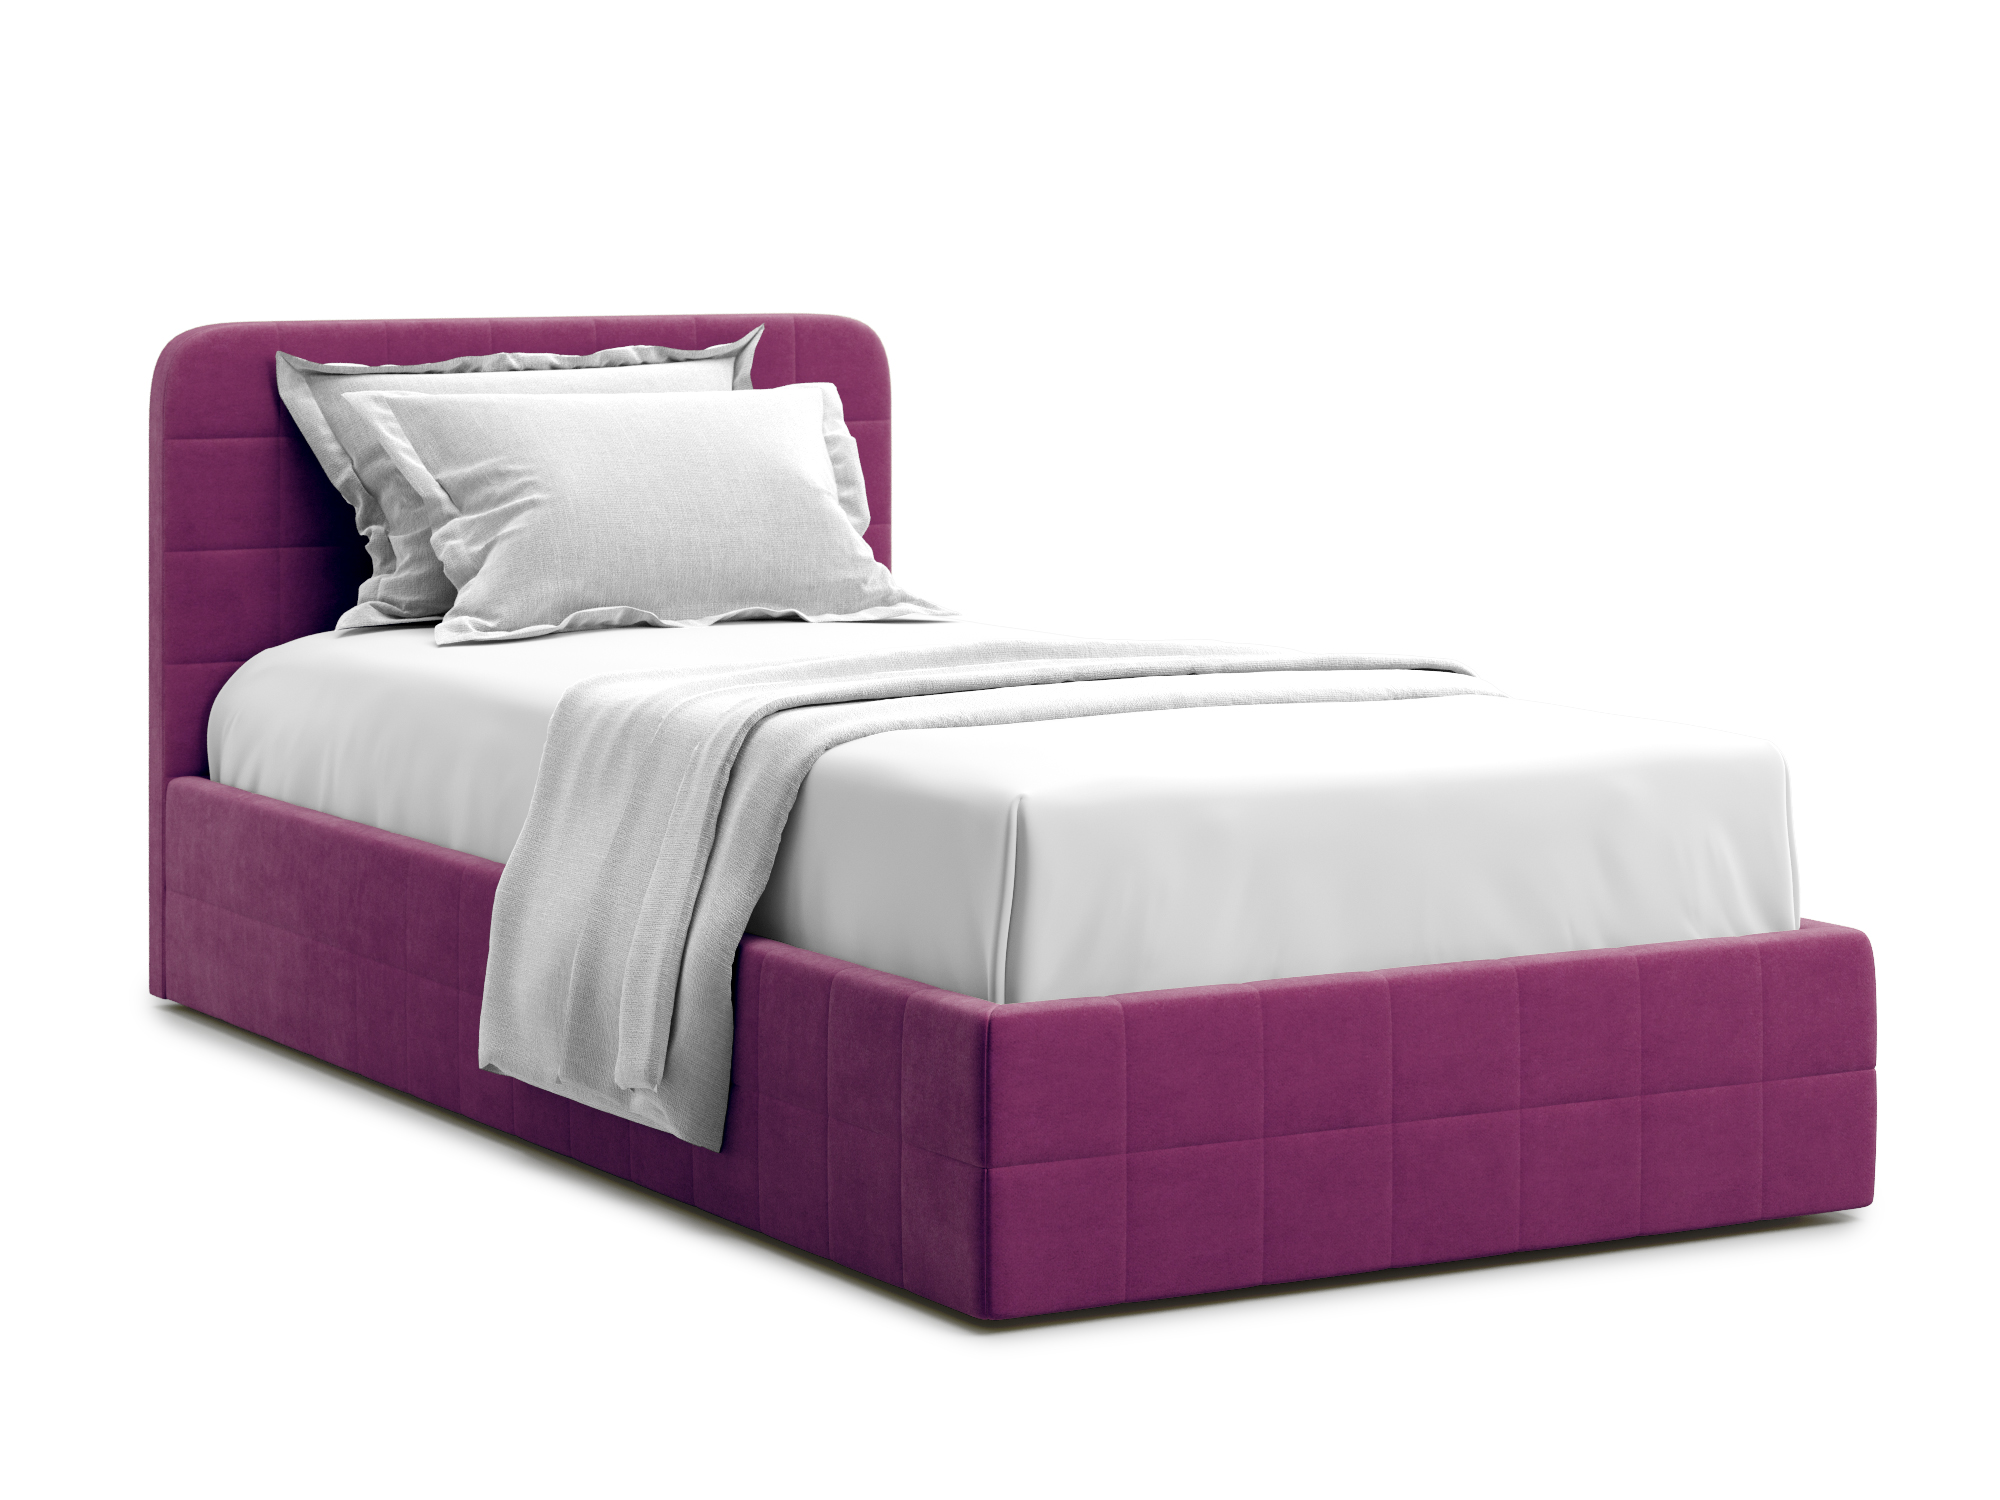 Кровать Adda 120 Velutto 15 Фиолетовый, Массив, ДСП кровать adda 90 velutto 15 фиолетовый массив дсп